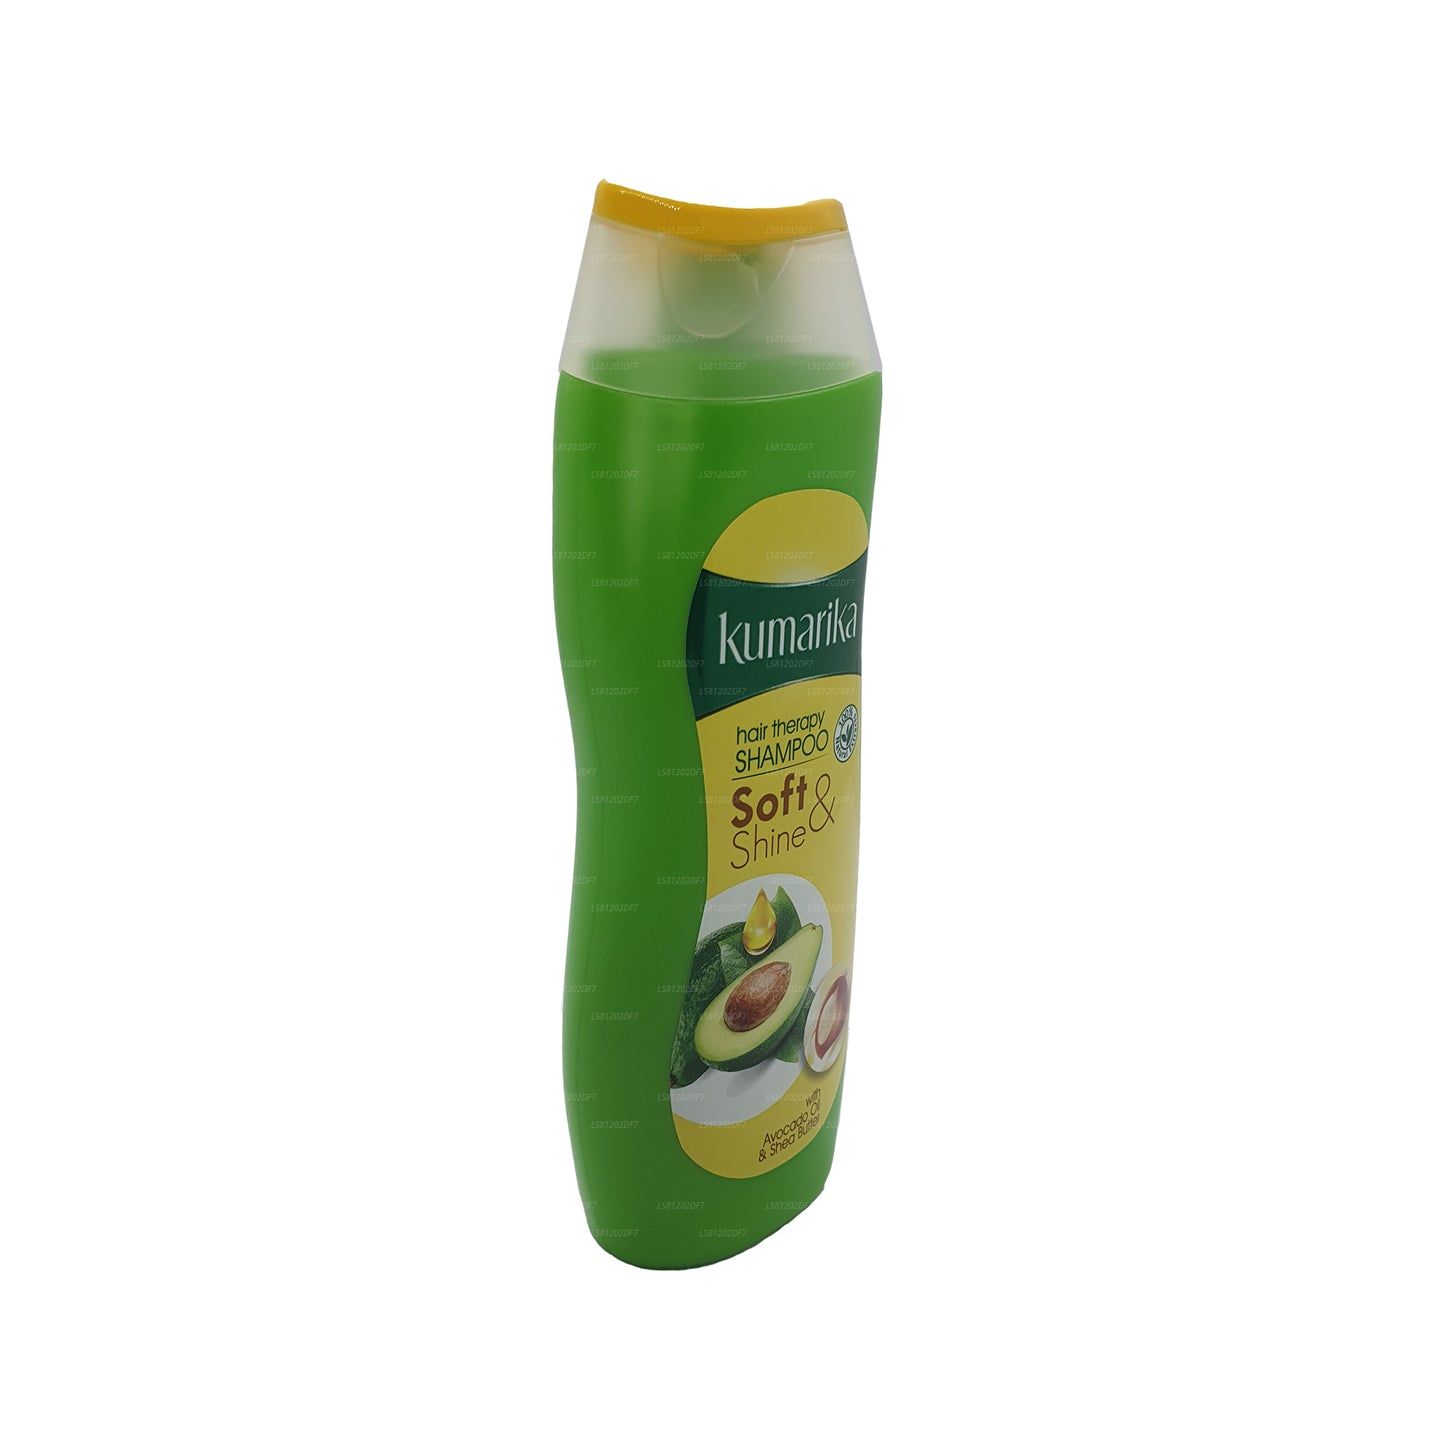 Kumarika Soft and Shine Haartherapie-Shampoo (90 ml)